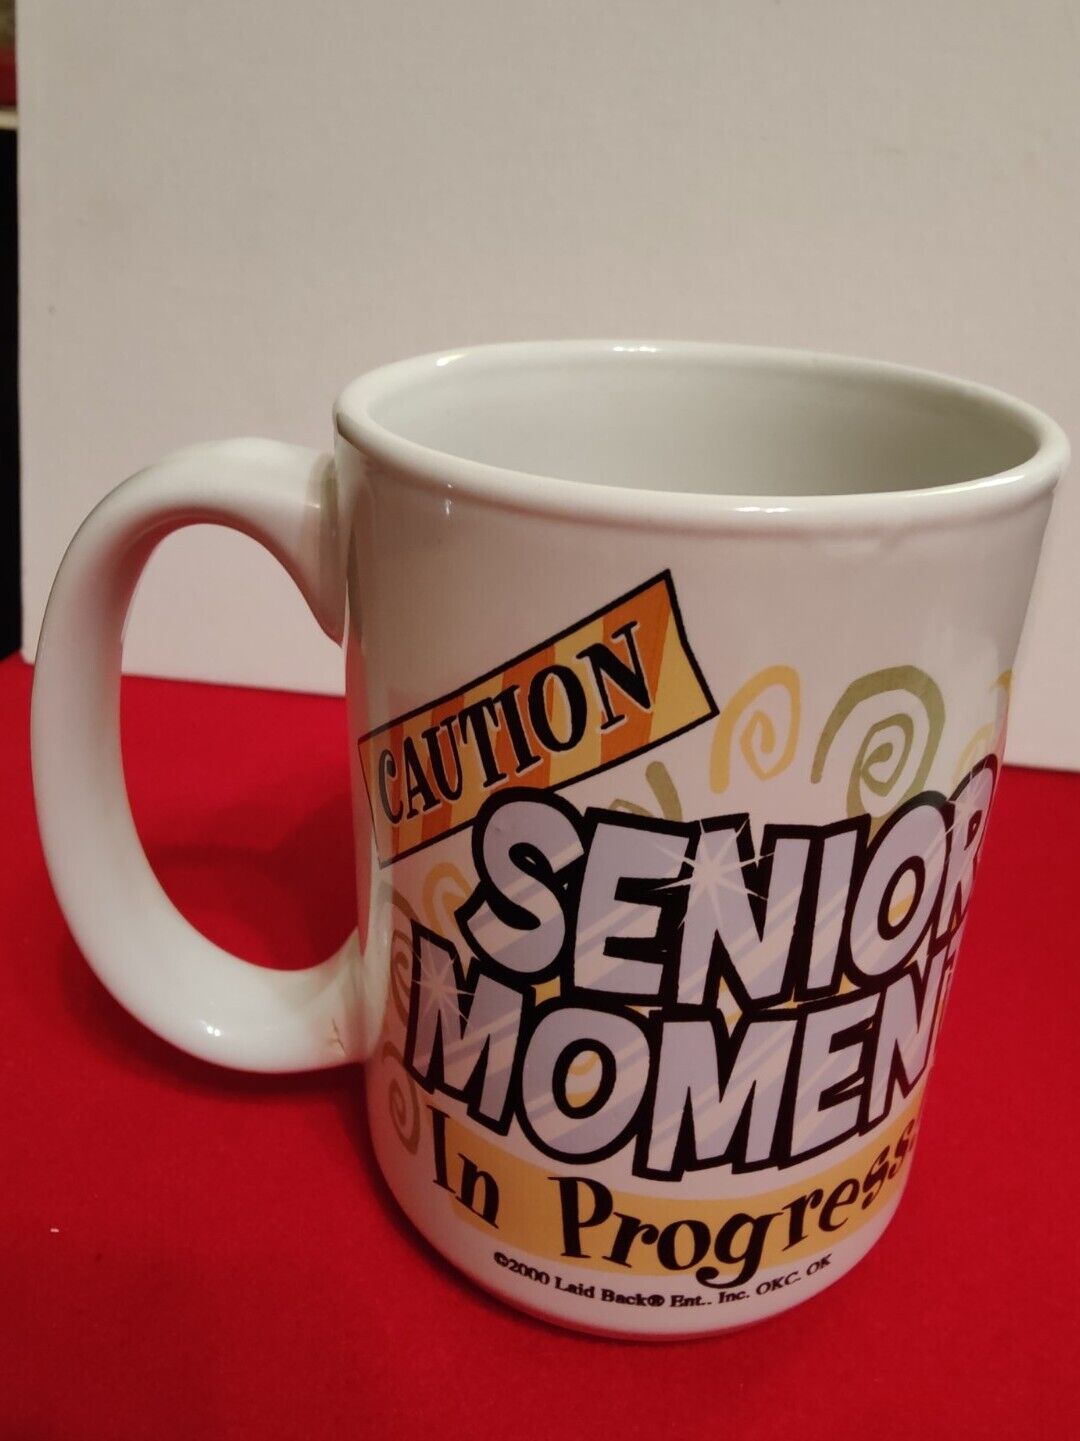 Caution Senior Moment Coffee Mug In Progress Ceramic Cup 2000 Laid Back Ent. USA